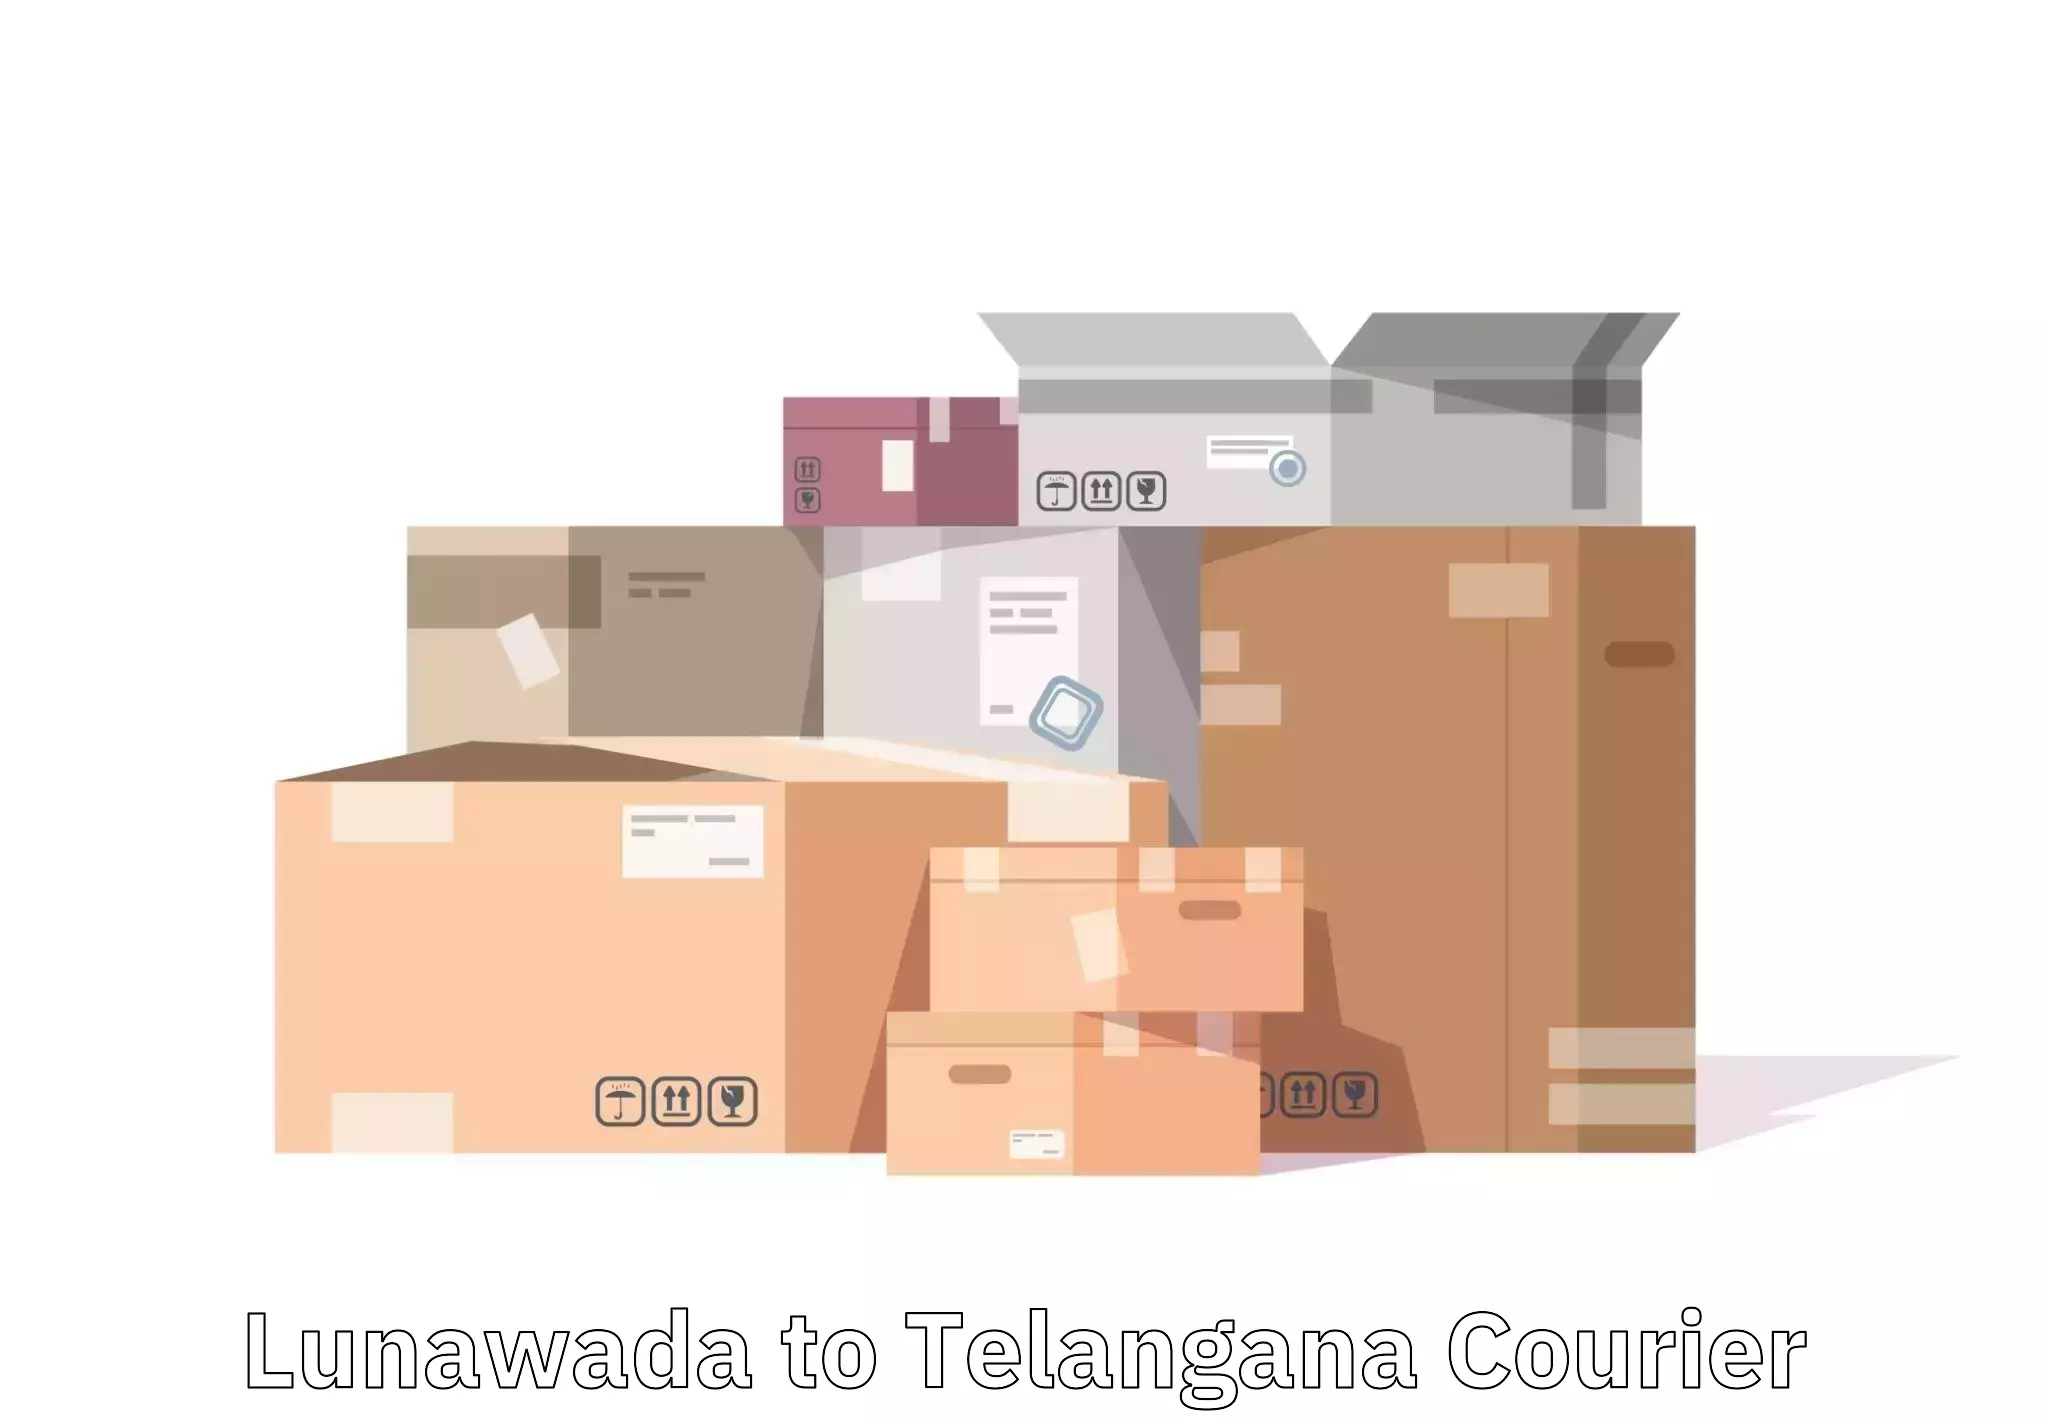 Premium luggage delivery in Lunawada to Manneguda